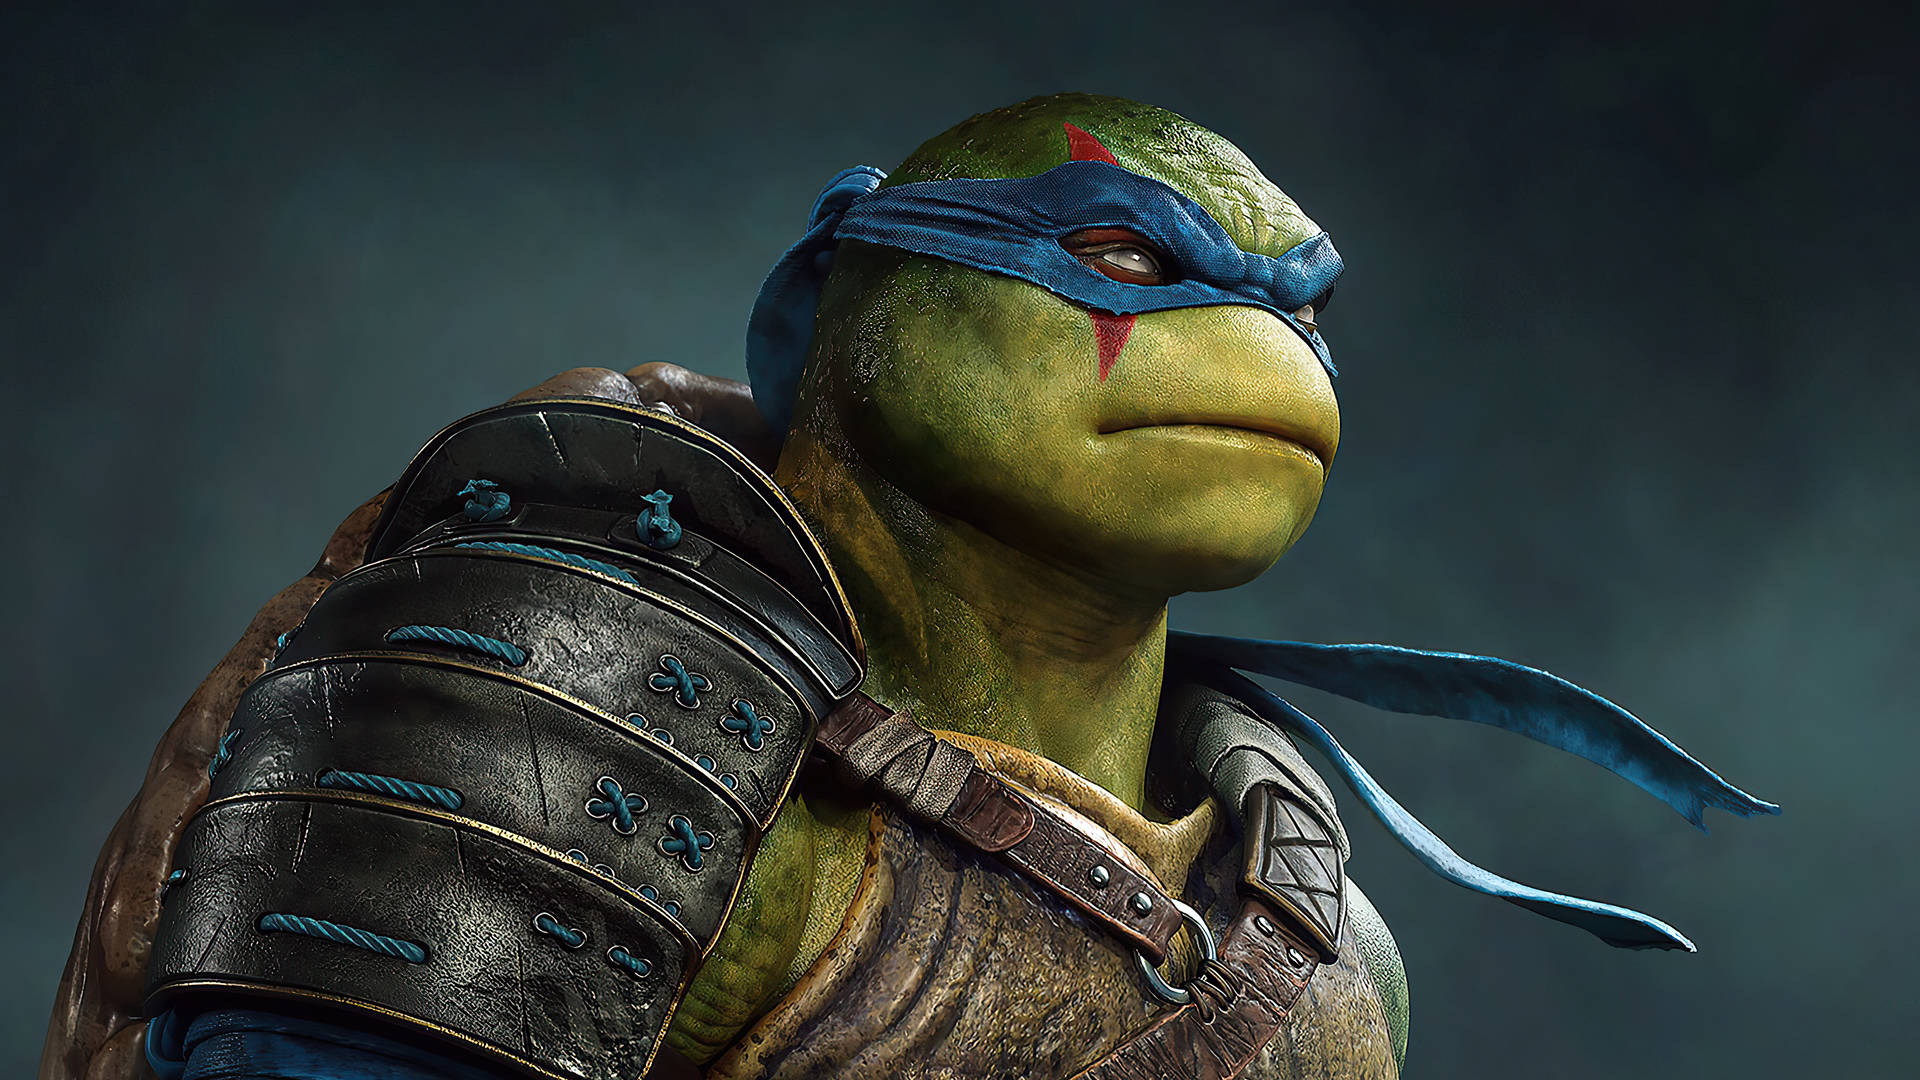 https://wallpapers.com/images/hd/teenage-mutant-ninja-turtles-serious-leonardo-5abq7h5lnbklemos.jpg